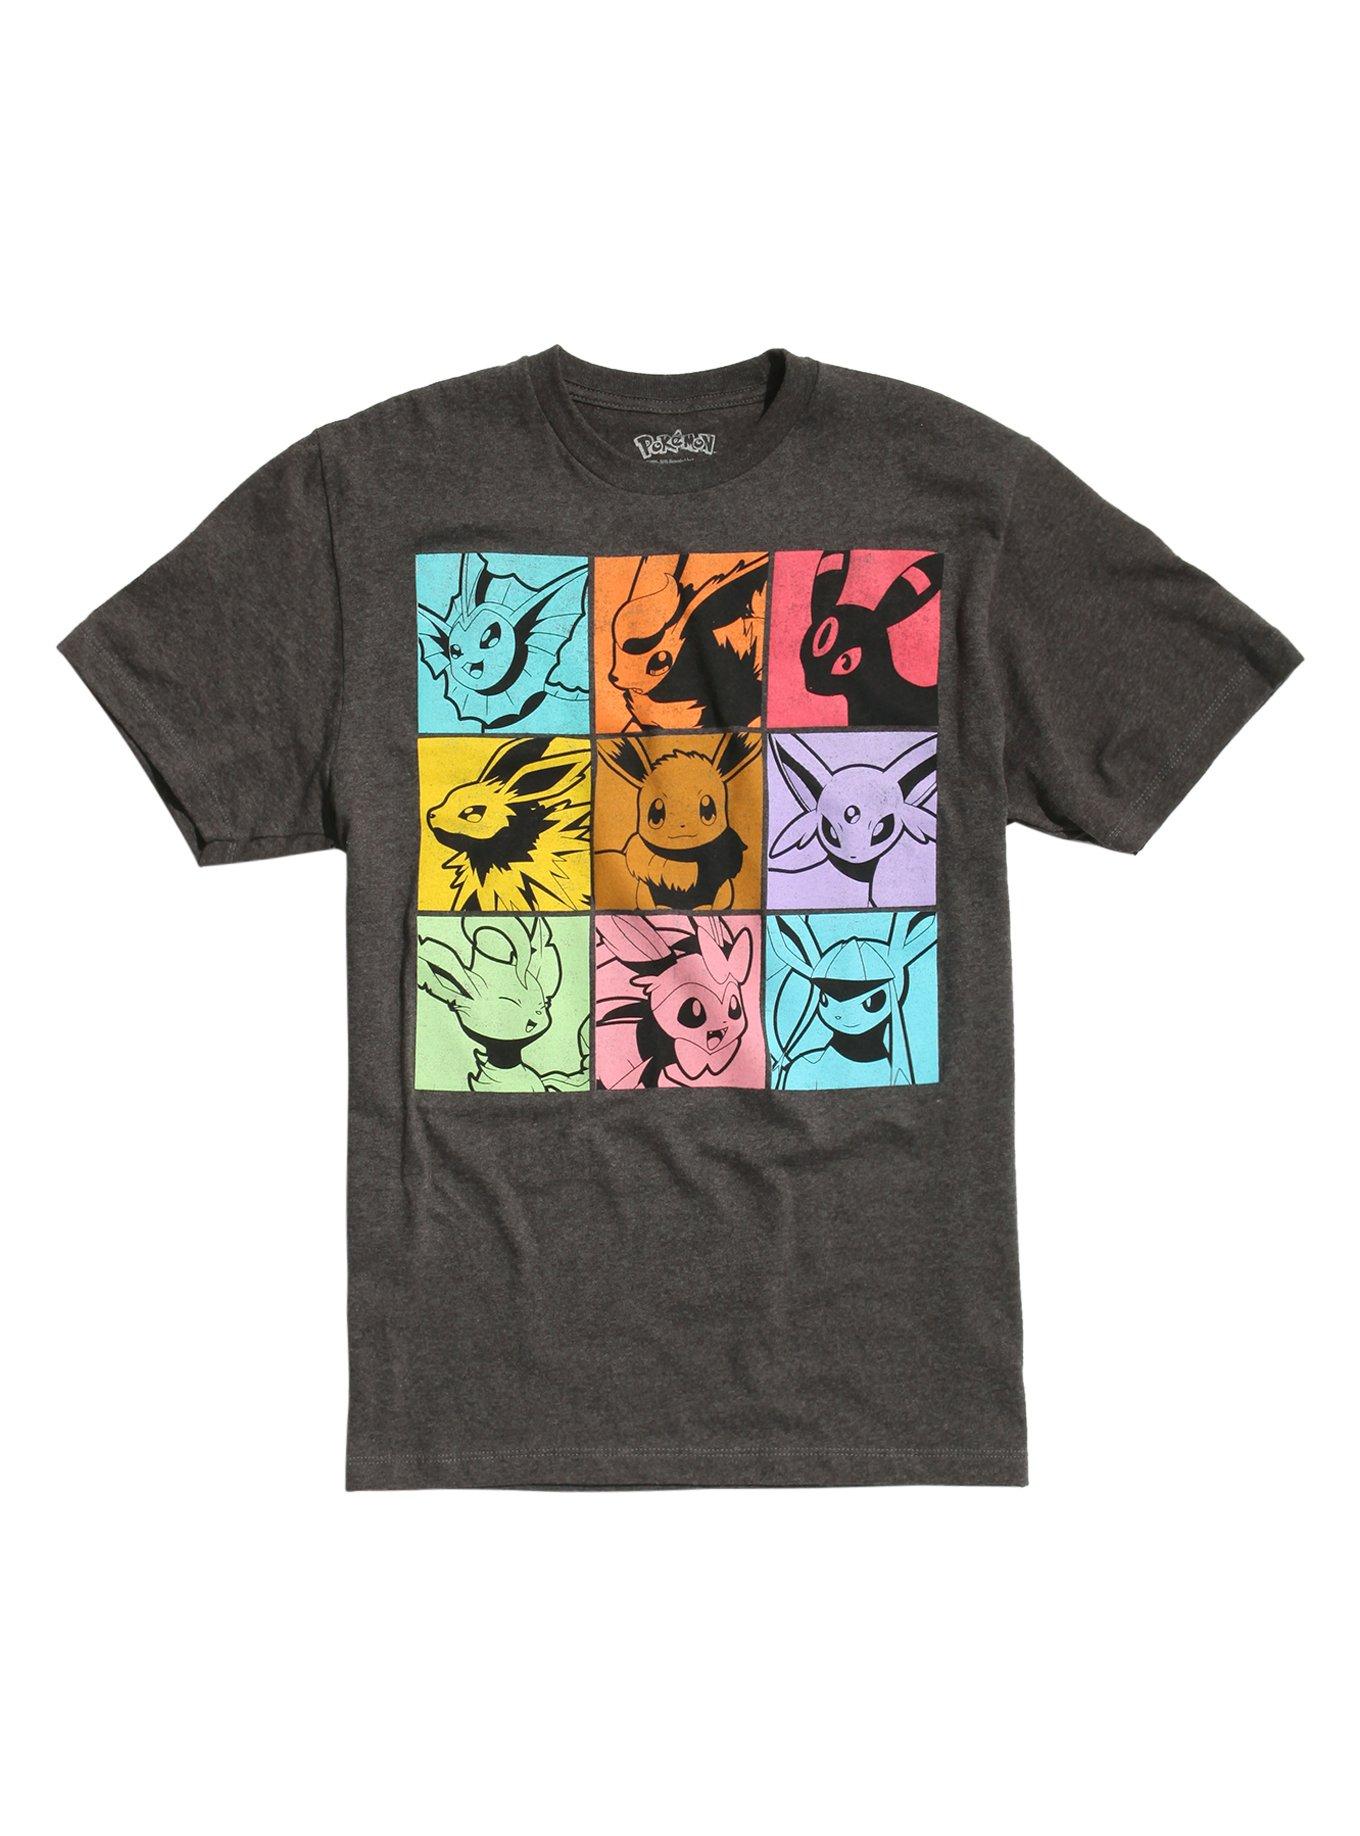 Eevee Evolution T Shirts! Variations Inside!